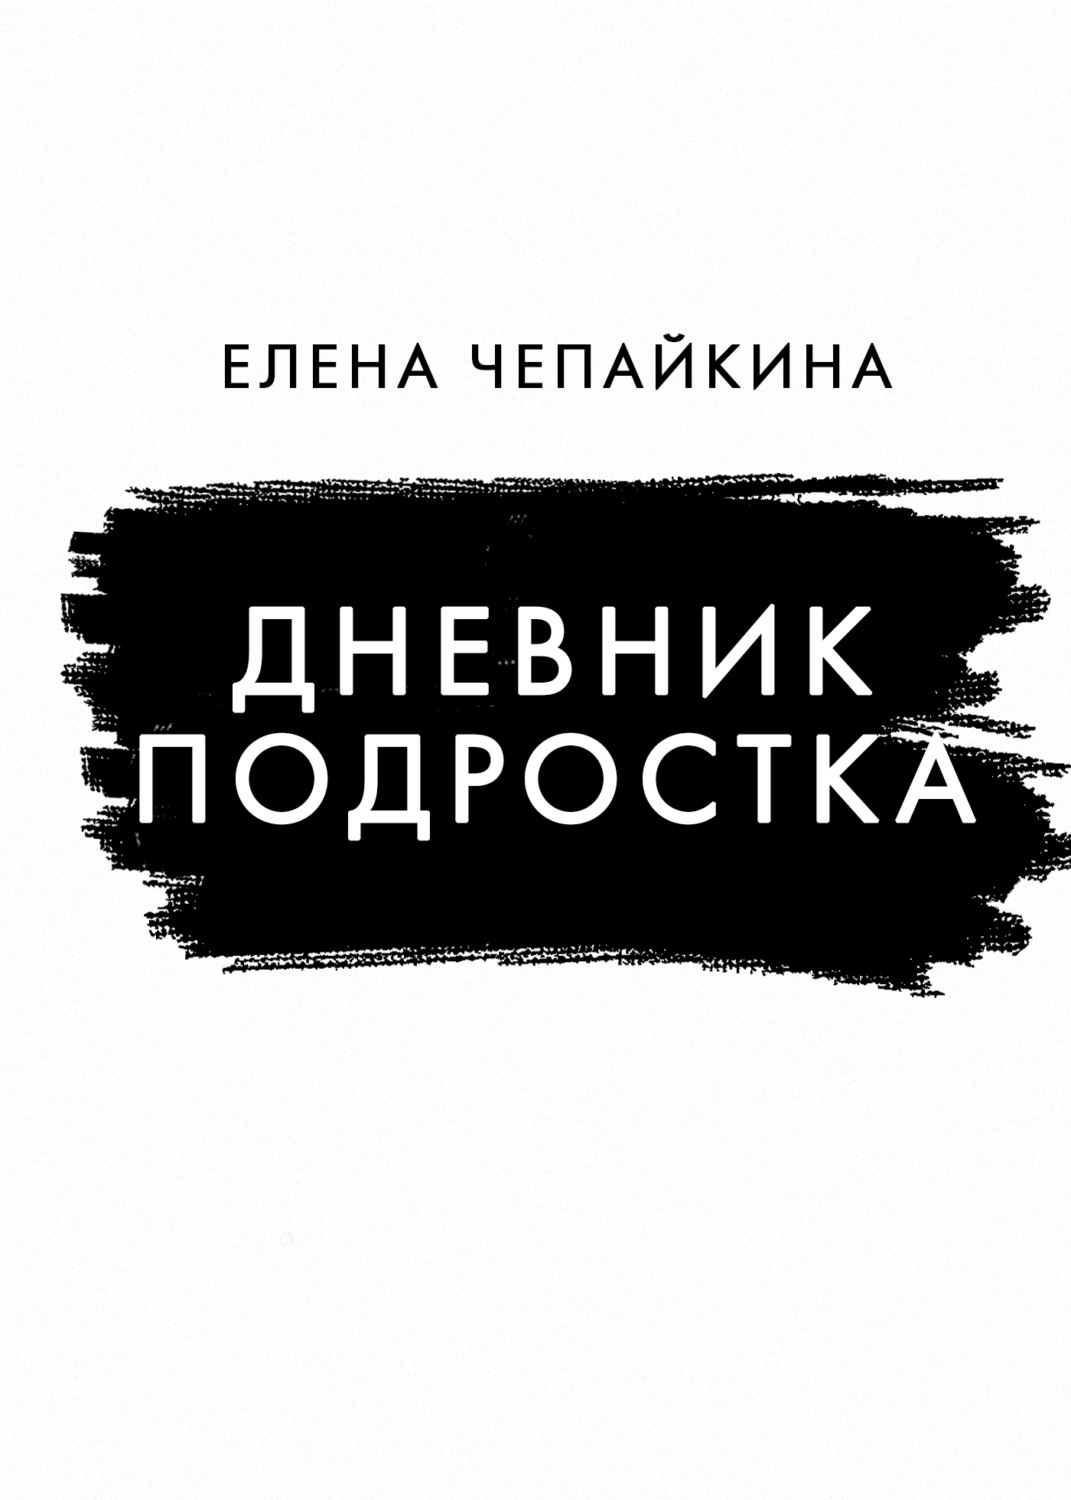 Дневник подростка, Елена Чепайкина – скачать книгу fb2, epub, pdf на Литрес